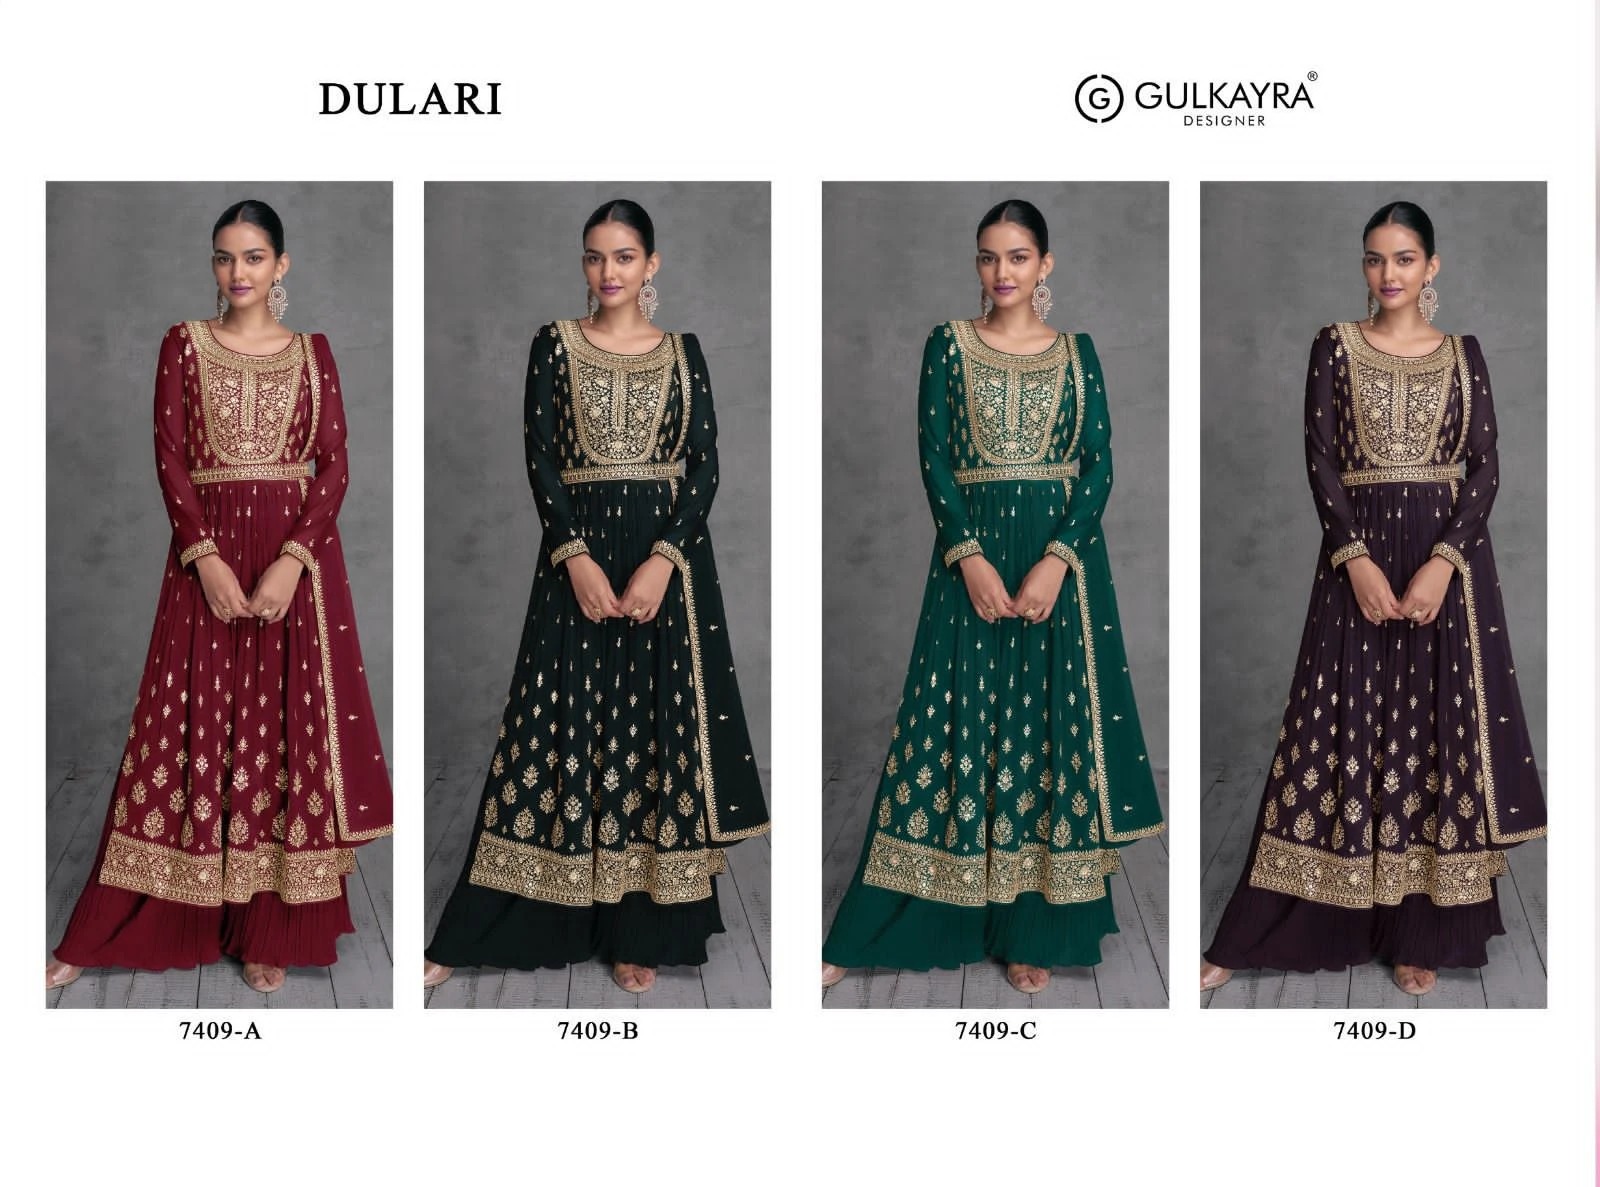 Gulkarya Dulari collection 5